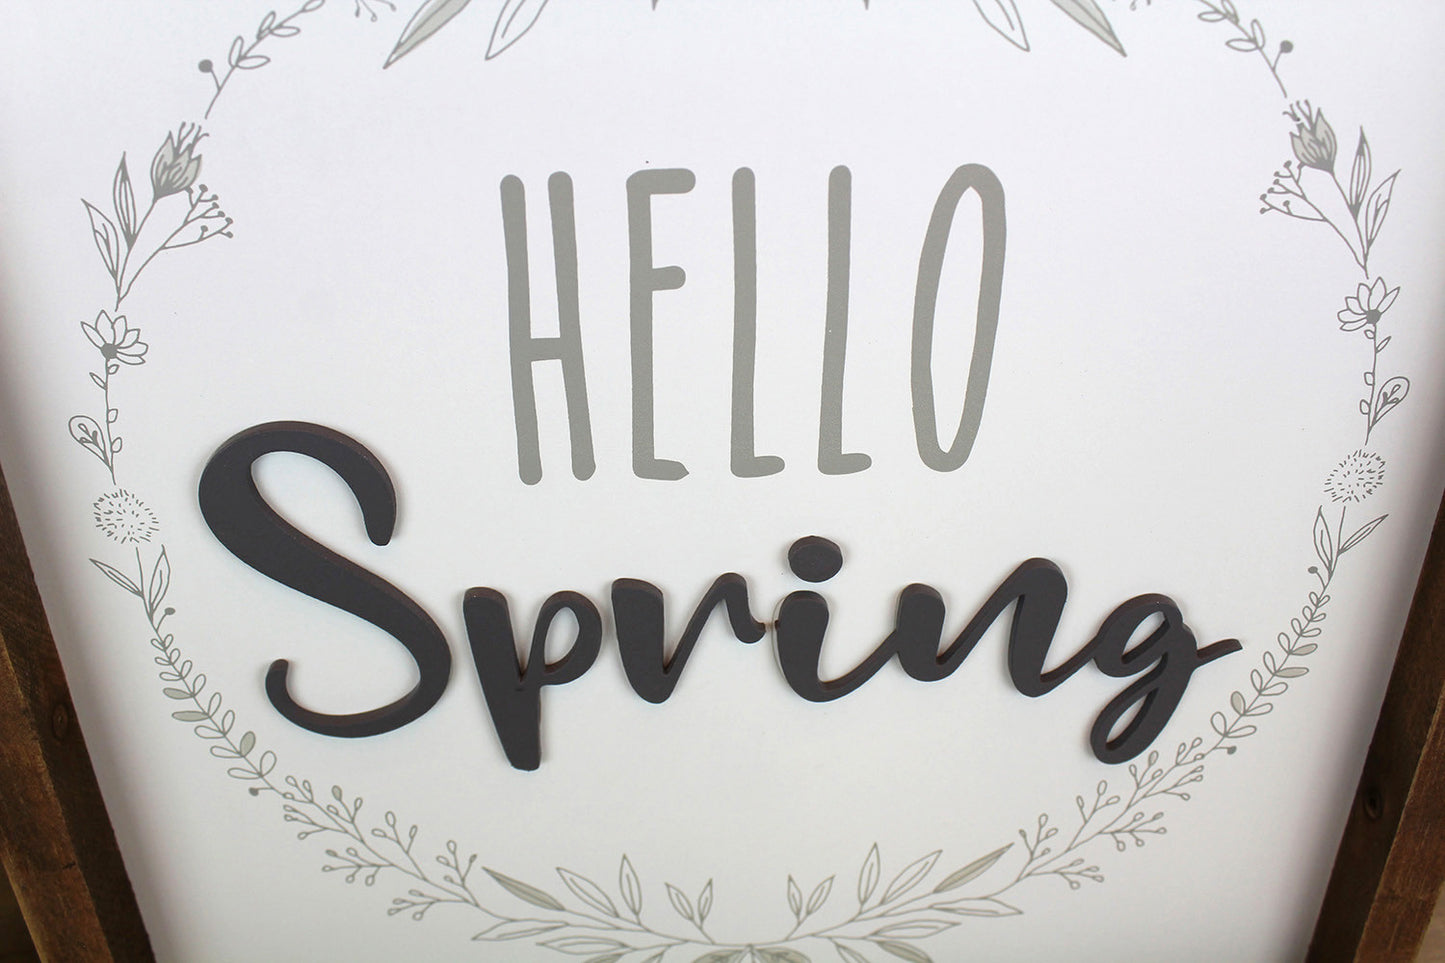 Hello Spring Framed Plaque